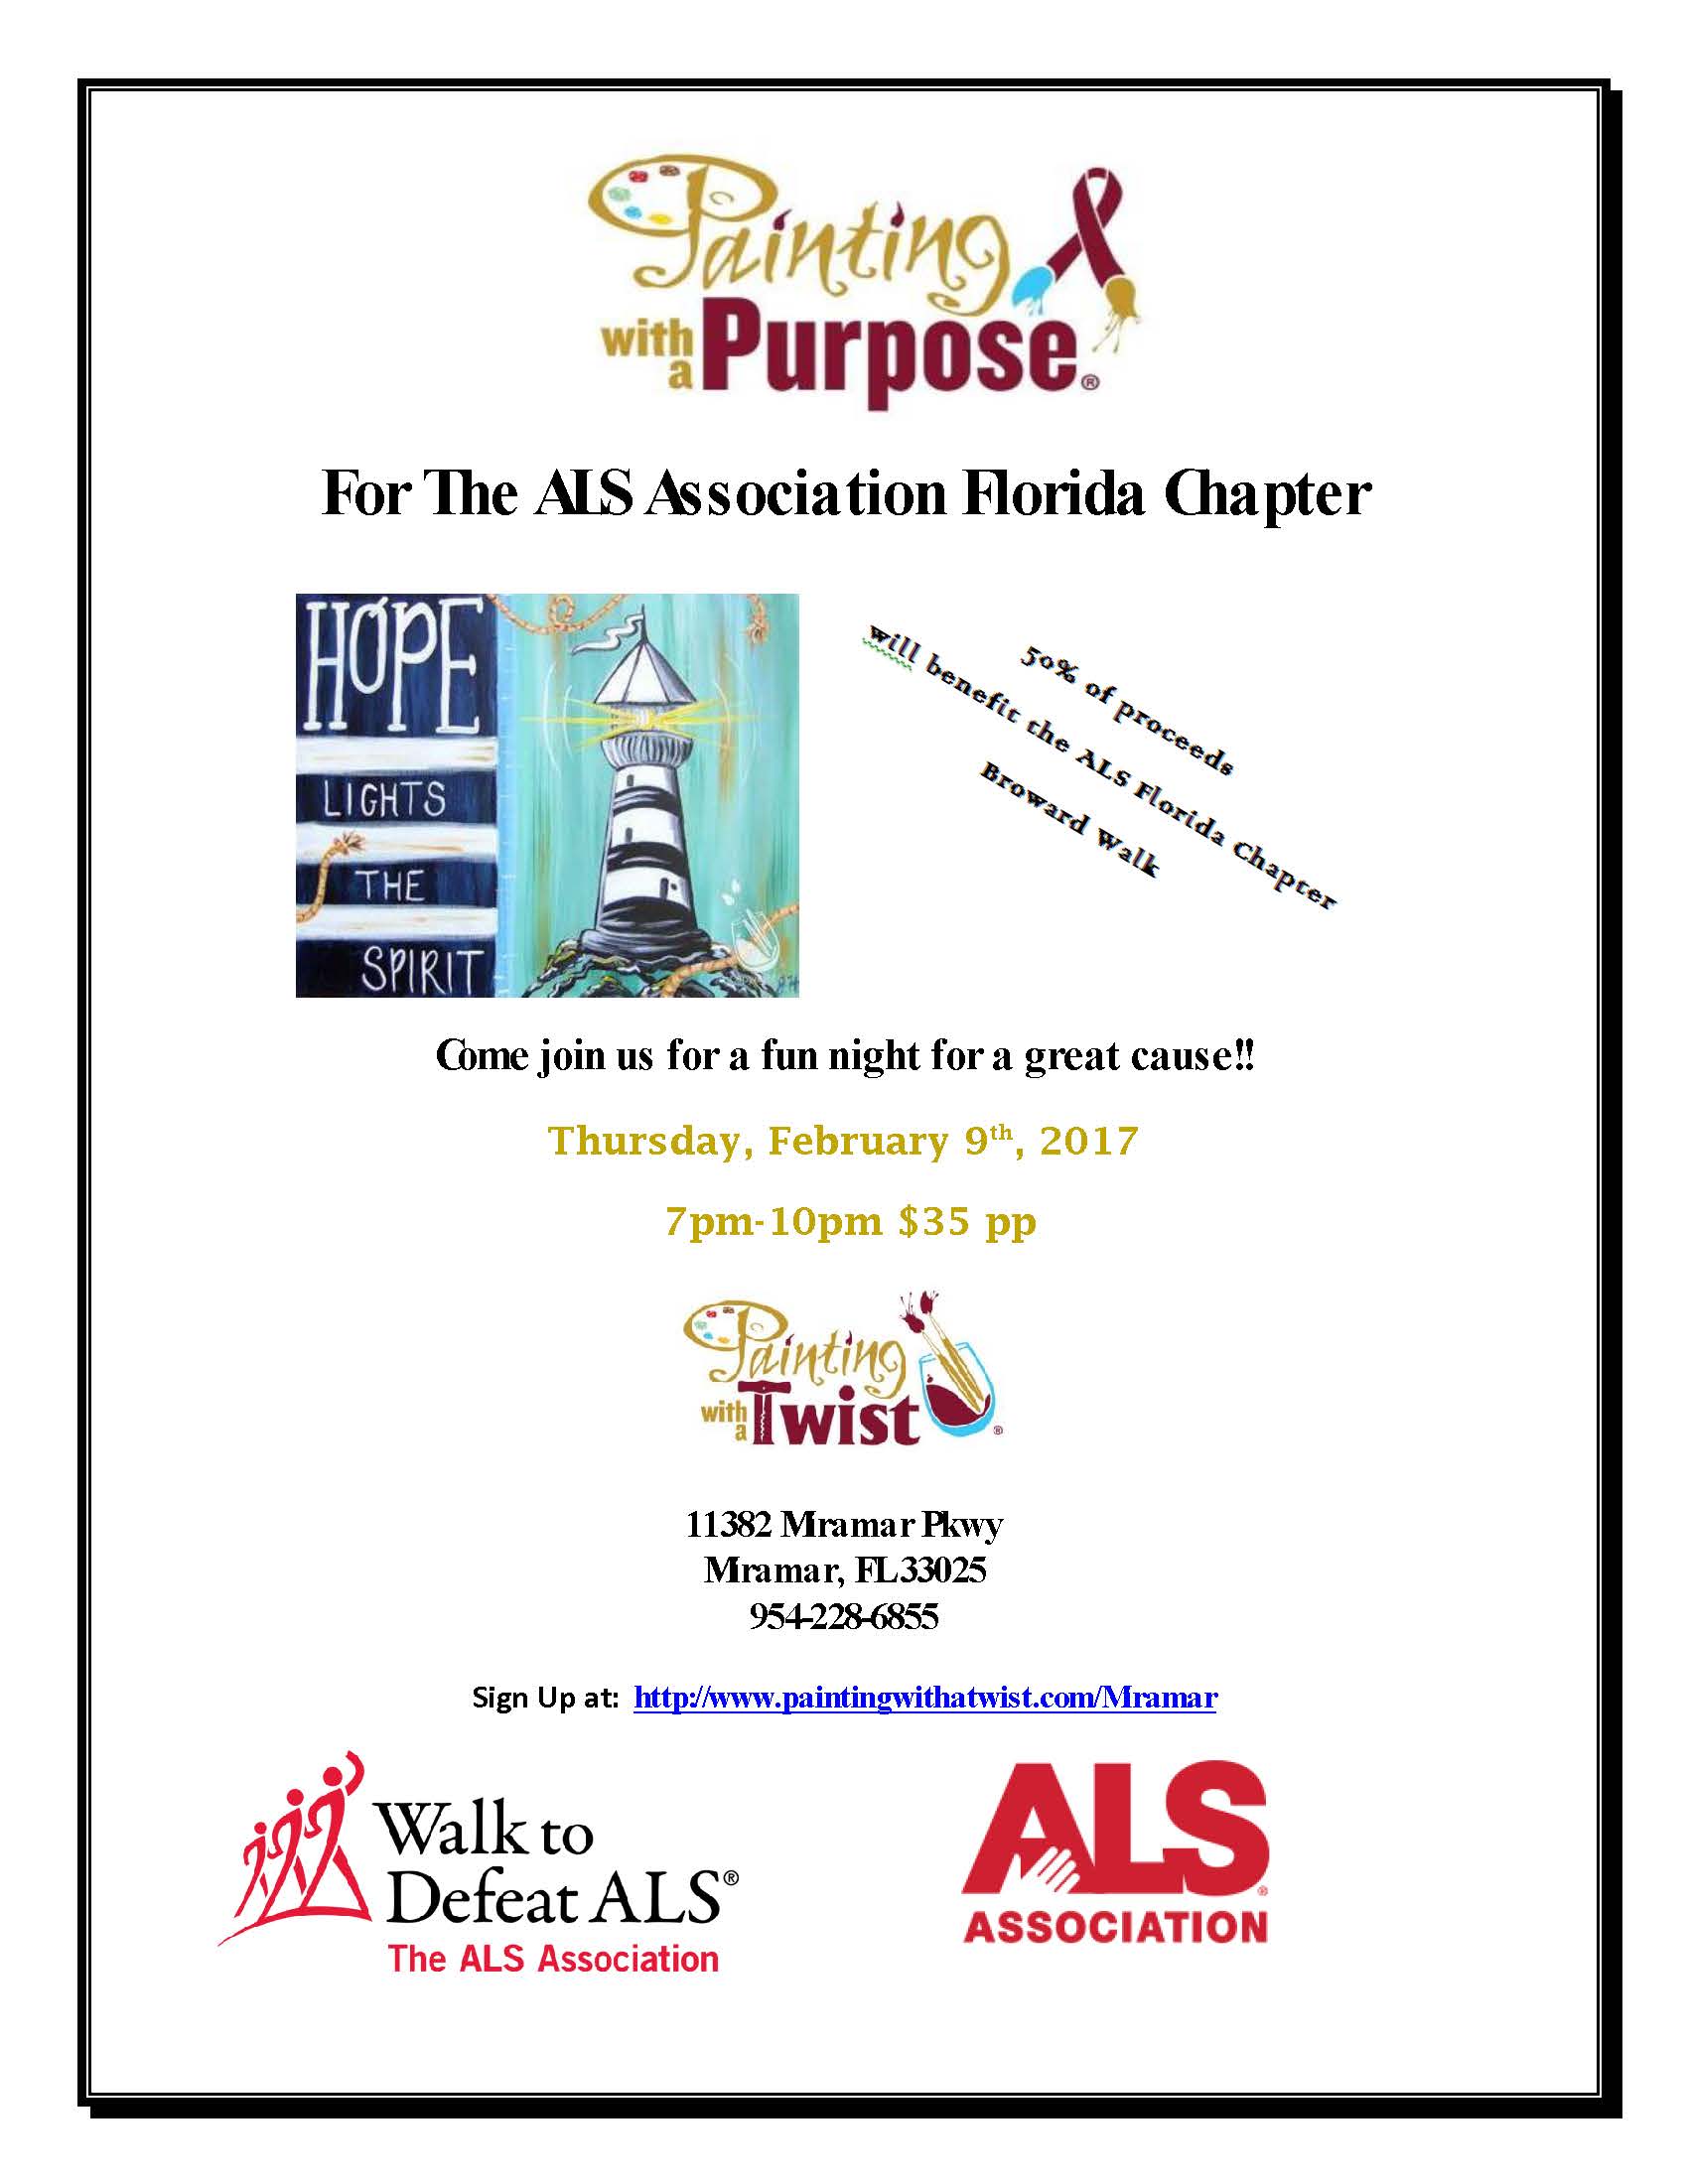 PWP ALS Association Florida Chapter.jpg